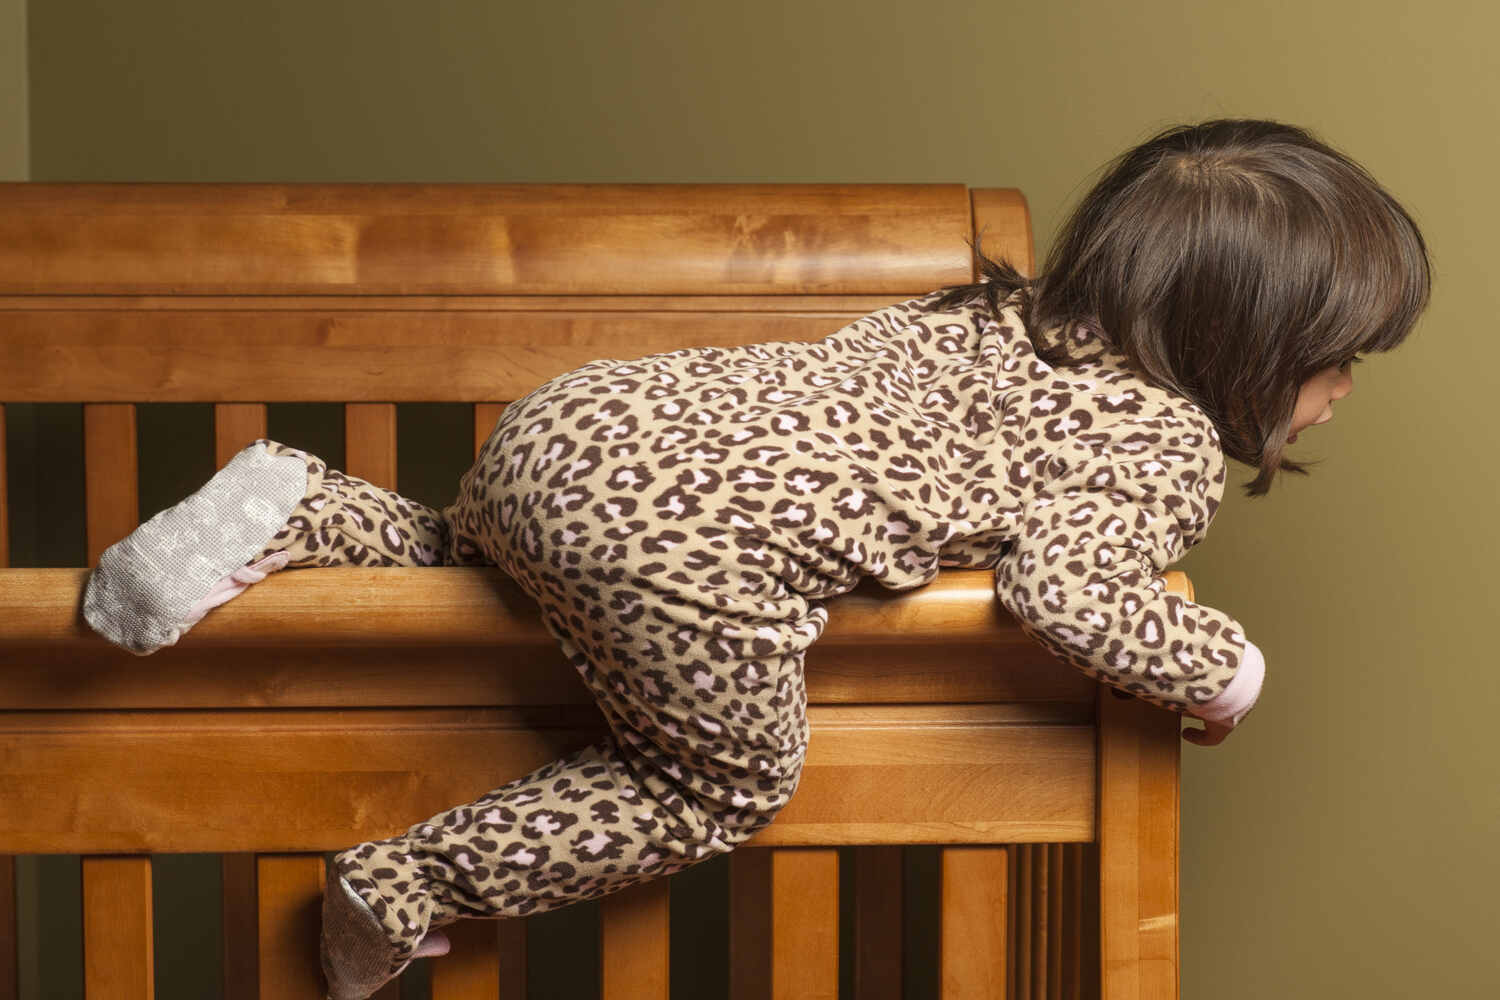 A toddler climbing out of crib